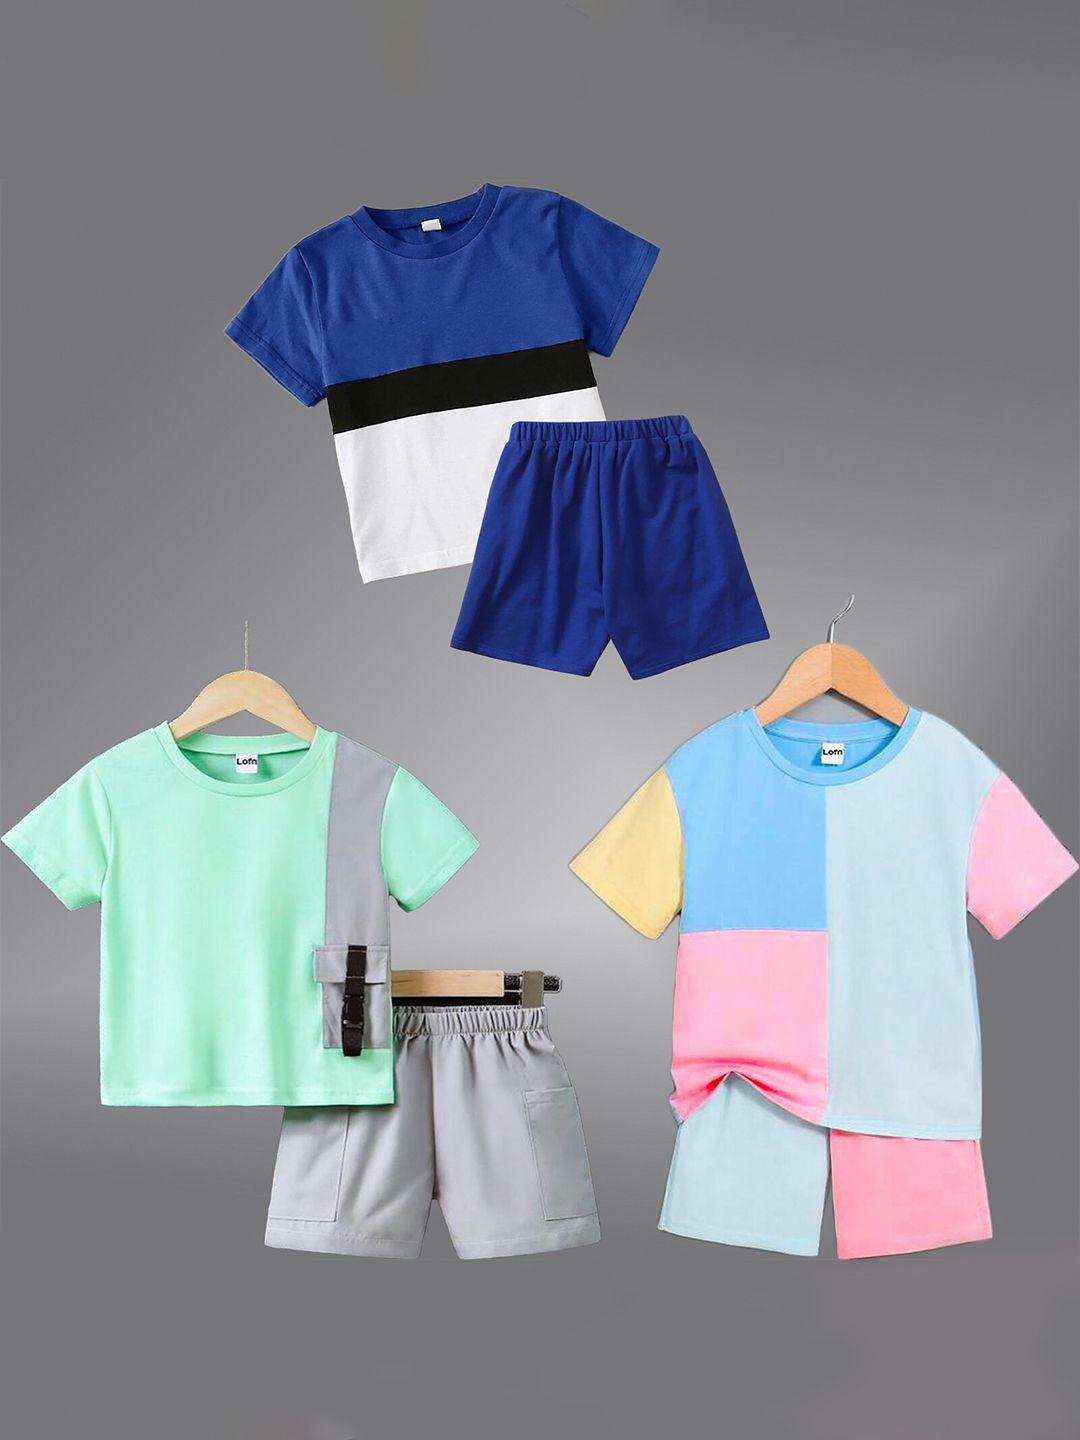 baesd unisex kids navy blue & grey colourblocked t-shirt with shorts